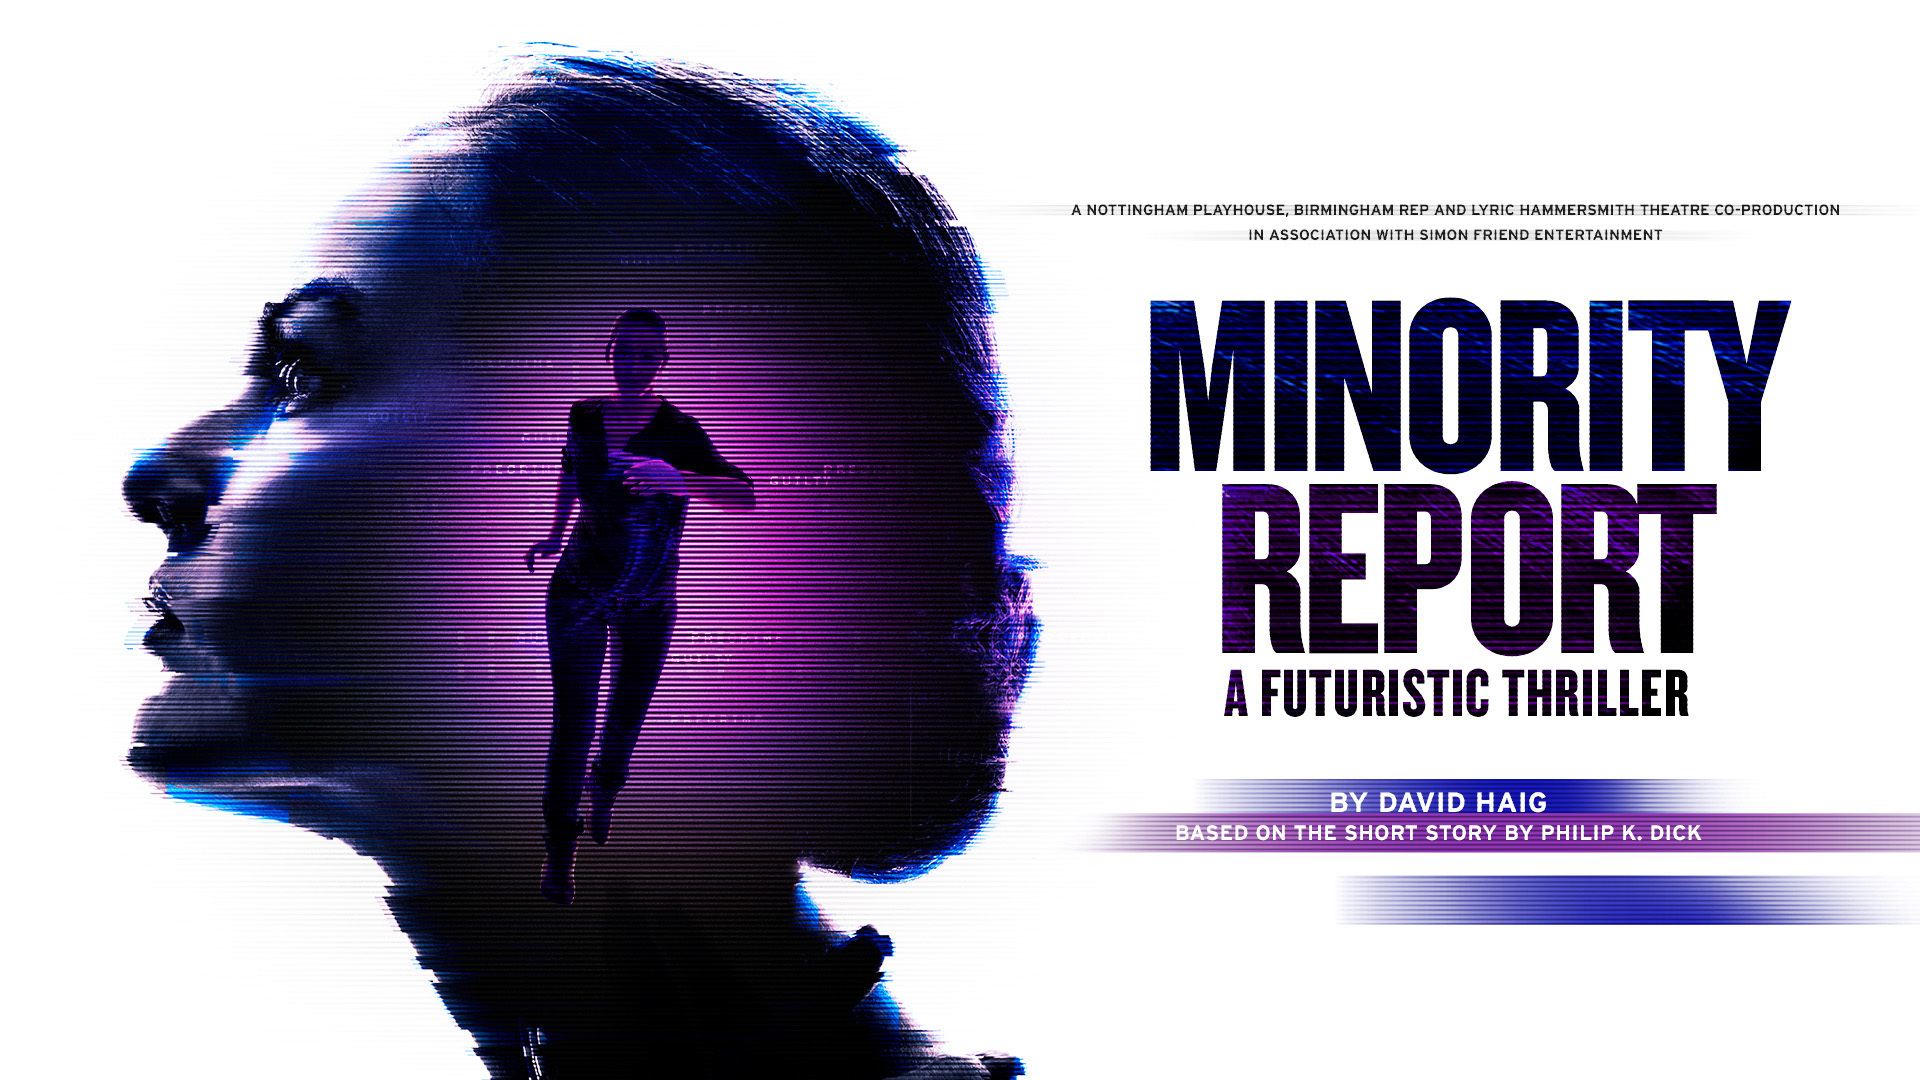 Theatre Review: Minority Report